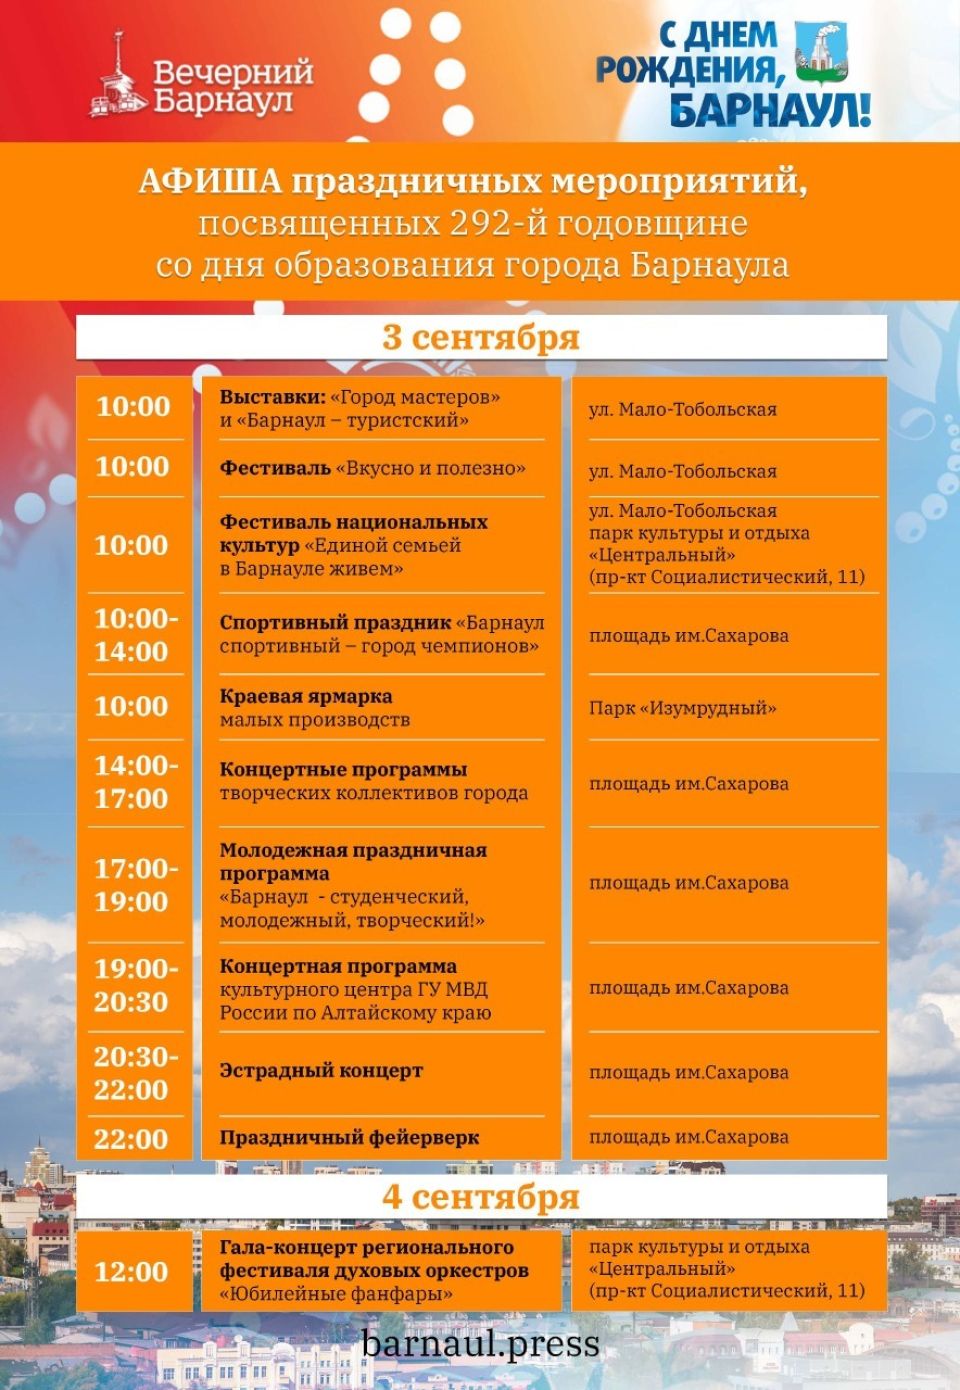 Мероприятия в барнауле сегодня. Программа дня города. Программа день города афиша. День города Барнаул. День города Барнаул афиша.